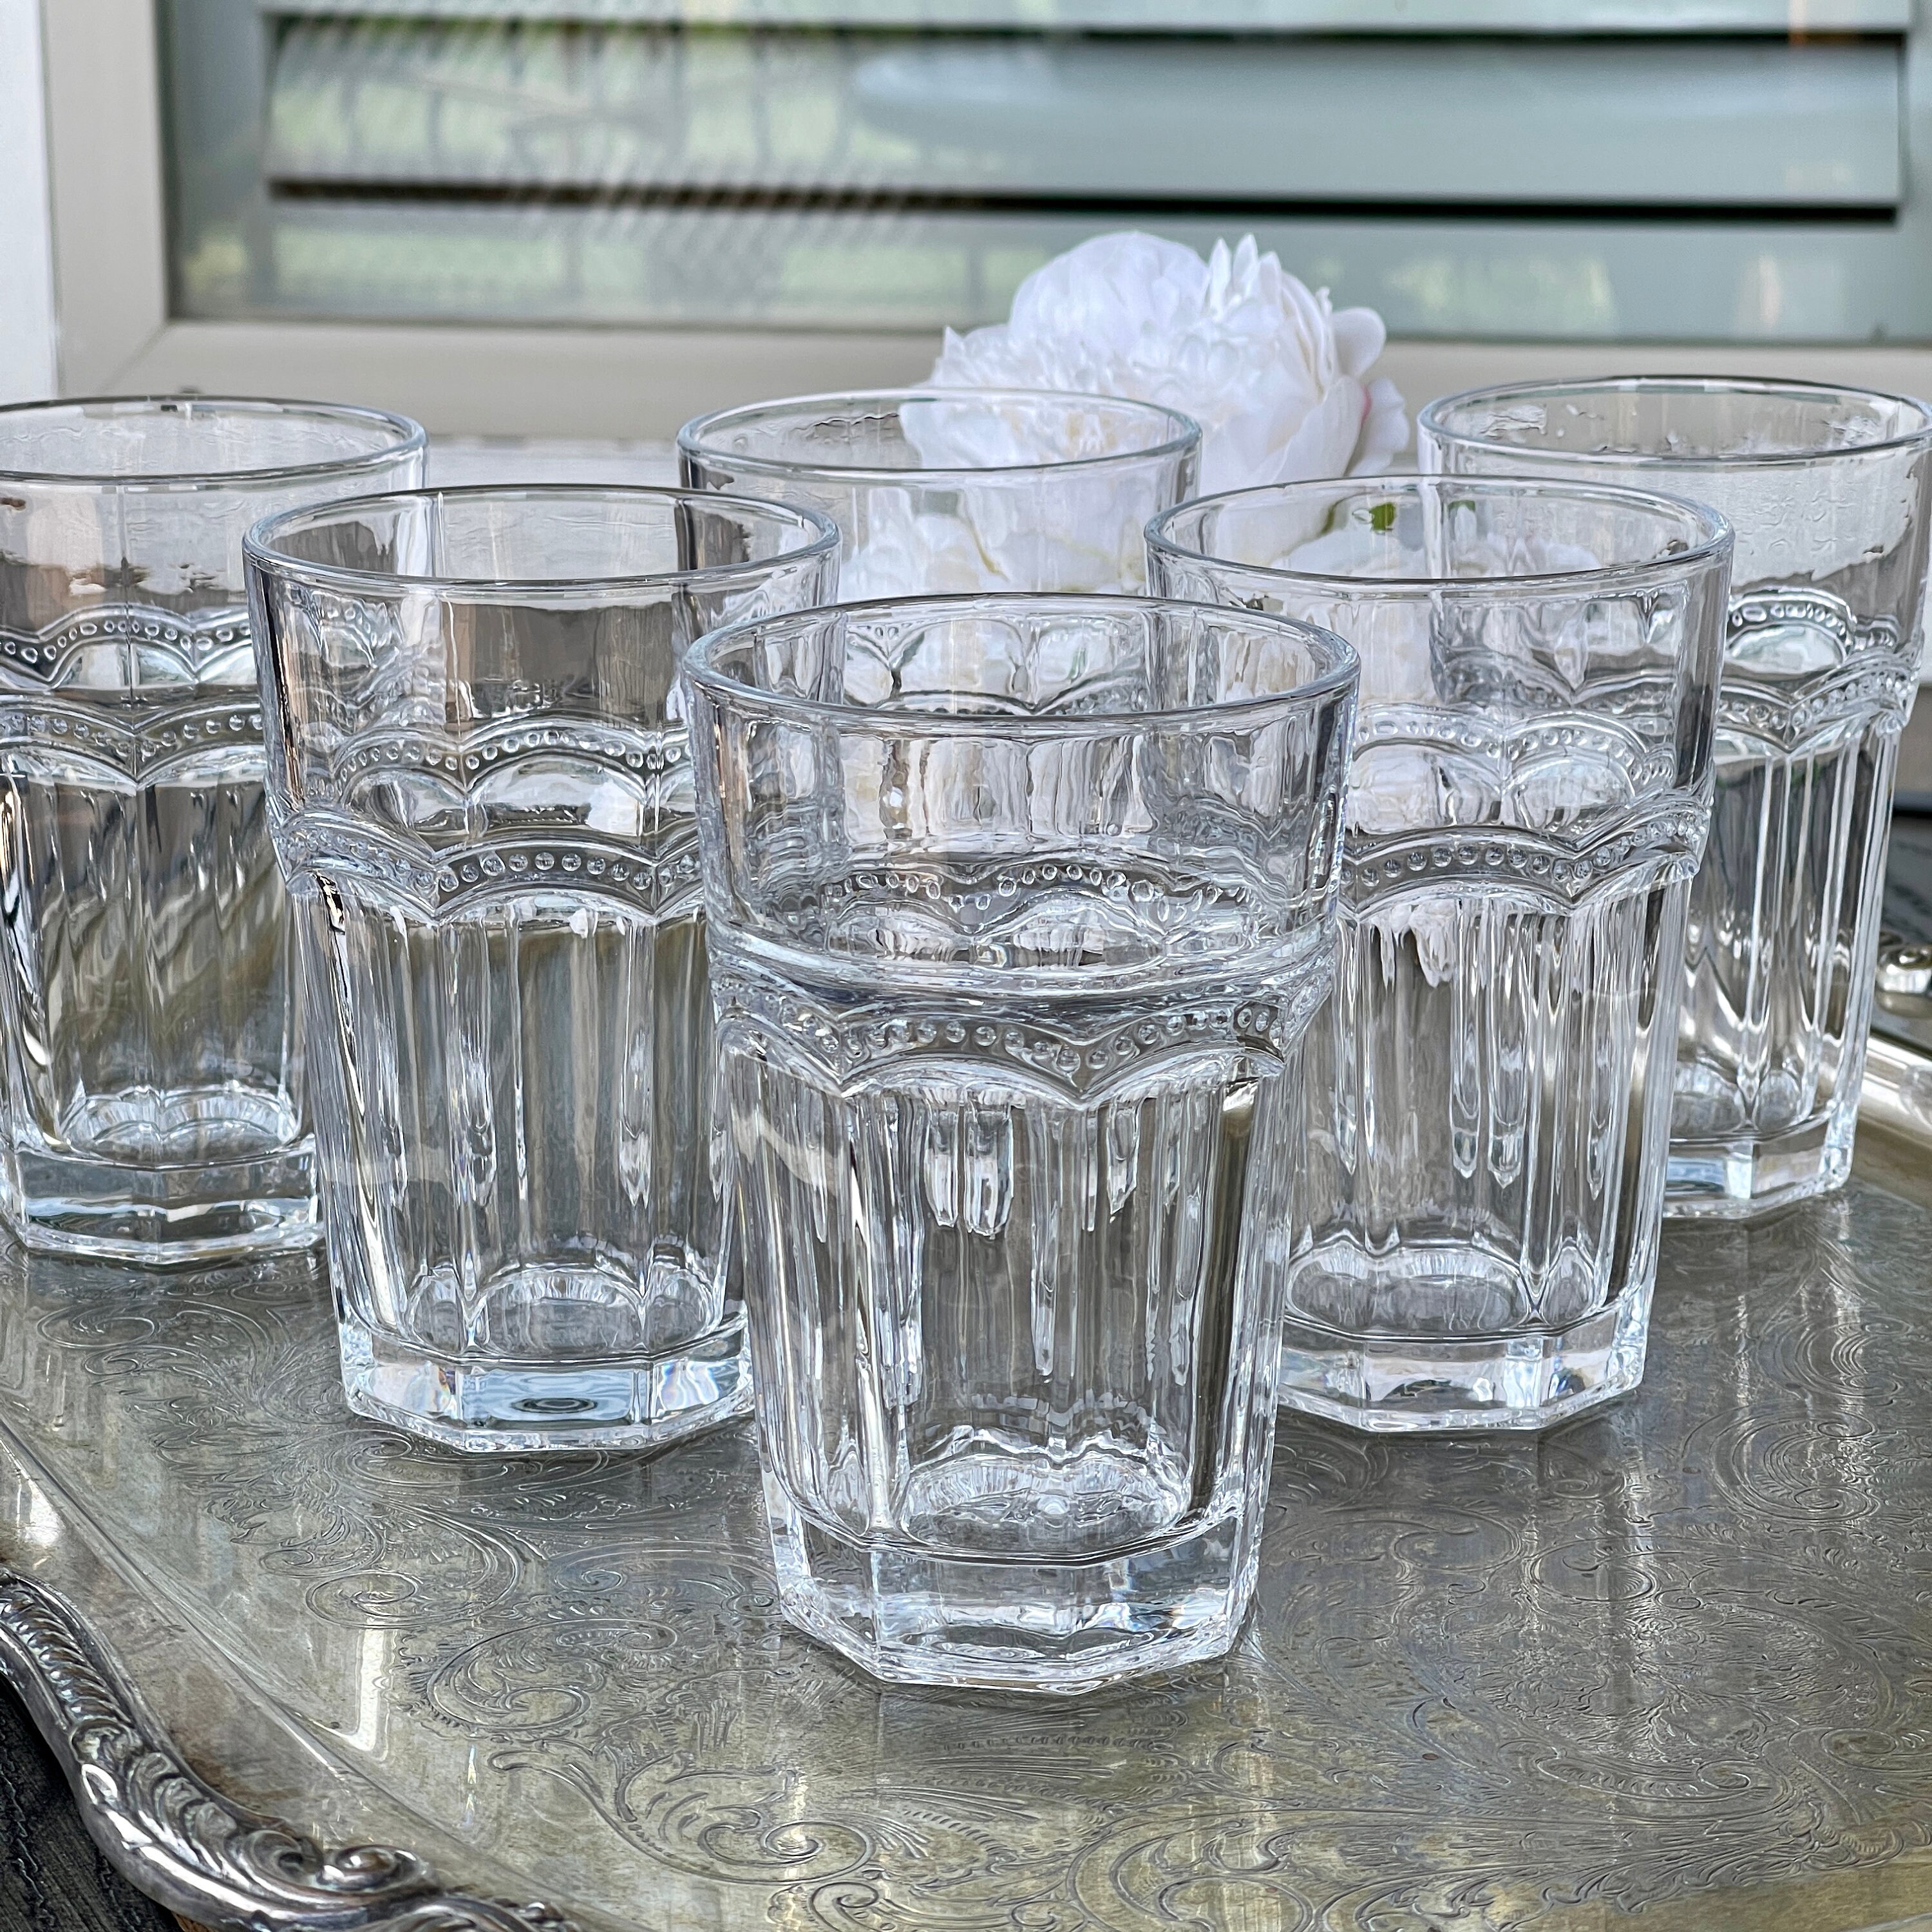 Hobnail Drinking Glasses, Set of 4, Assorted